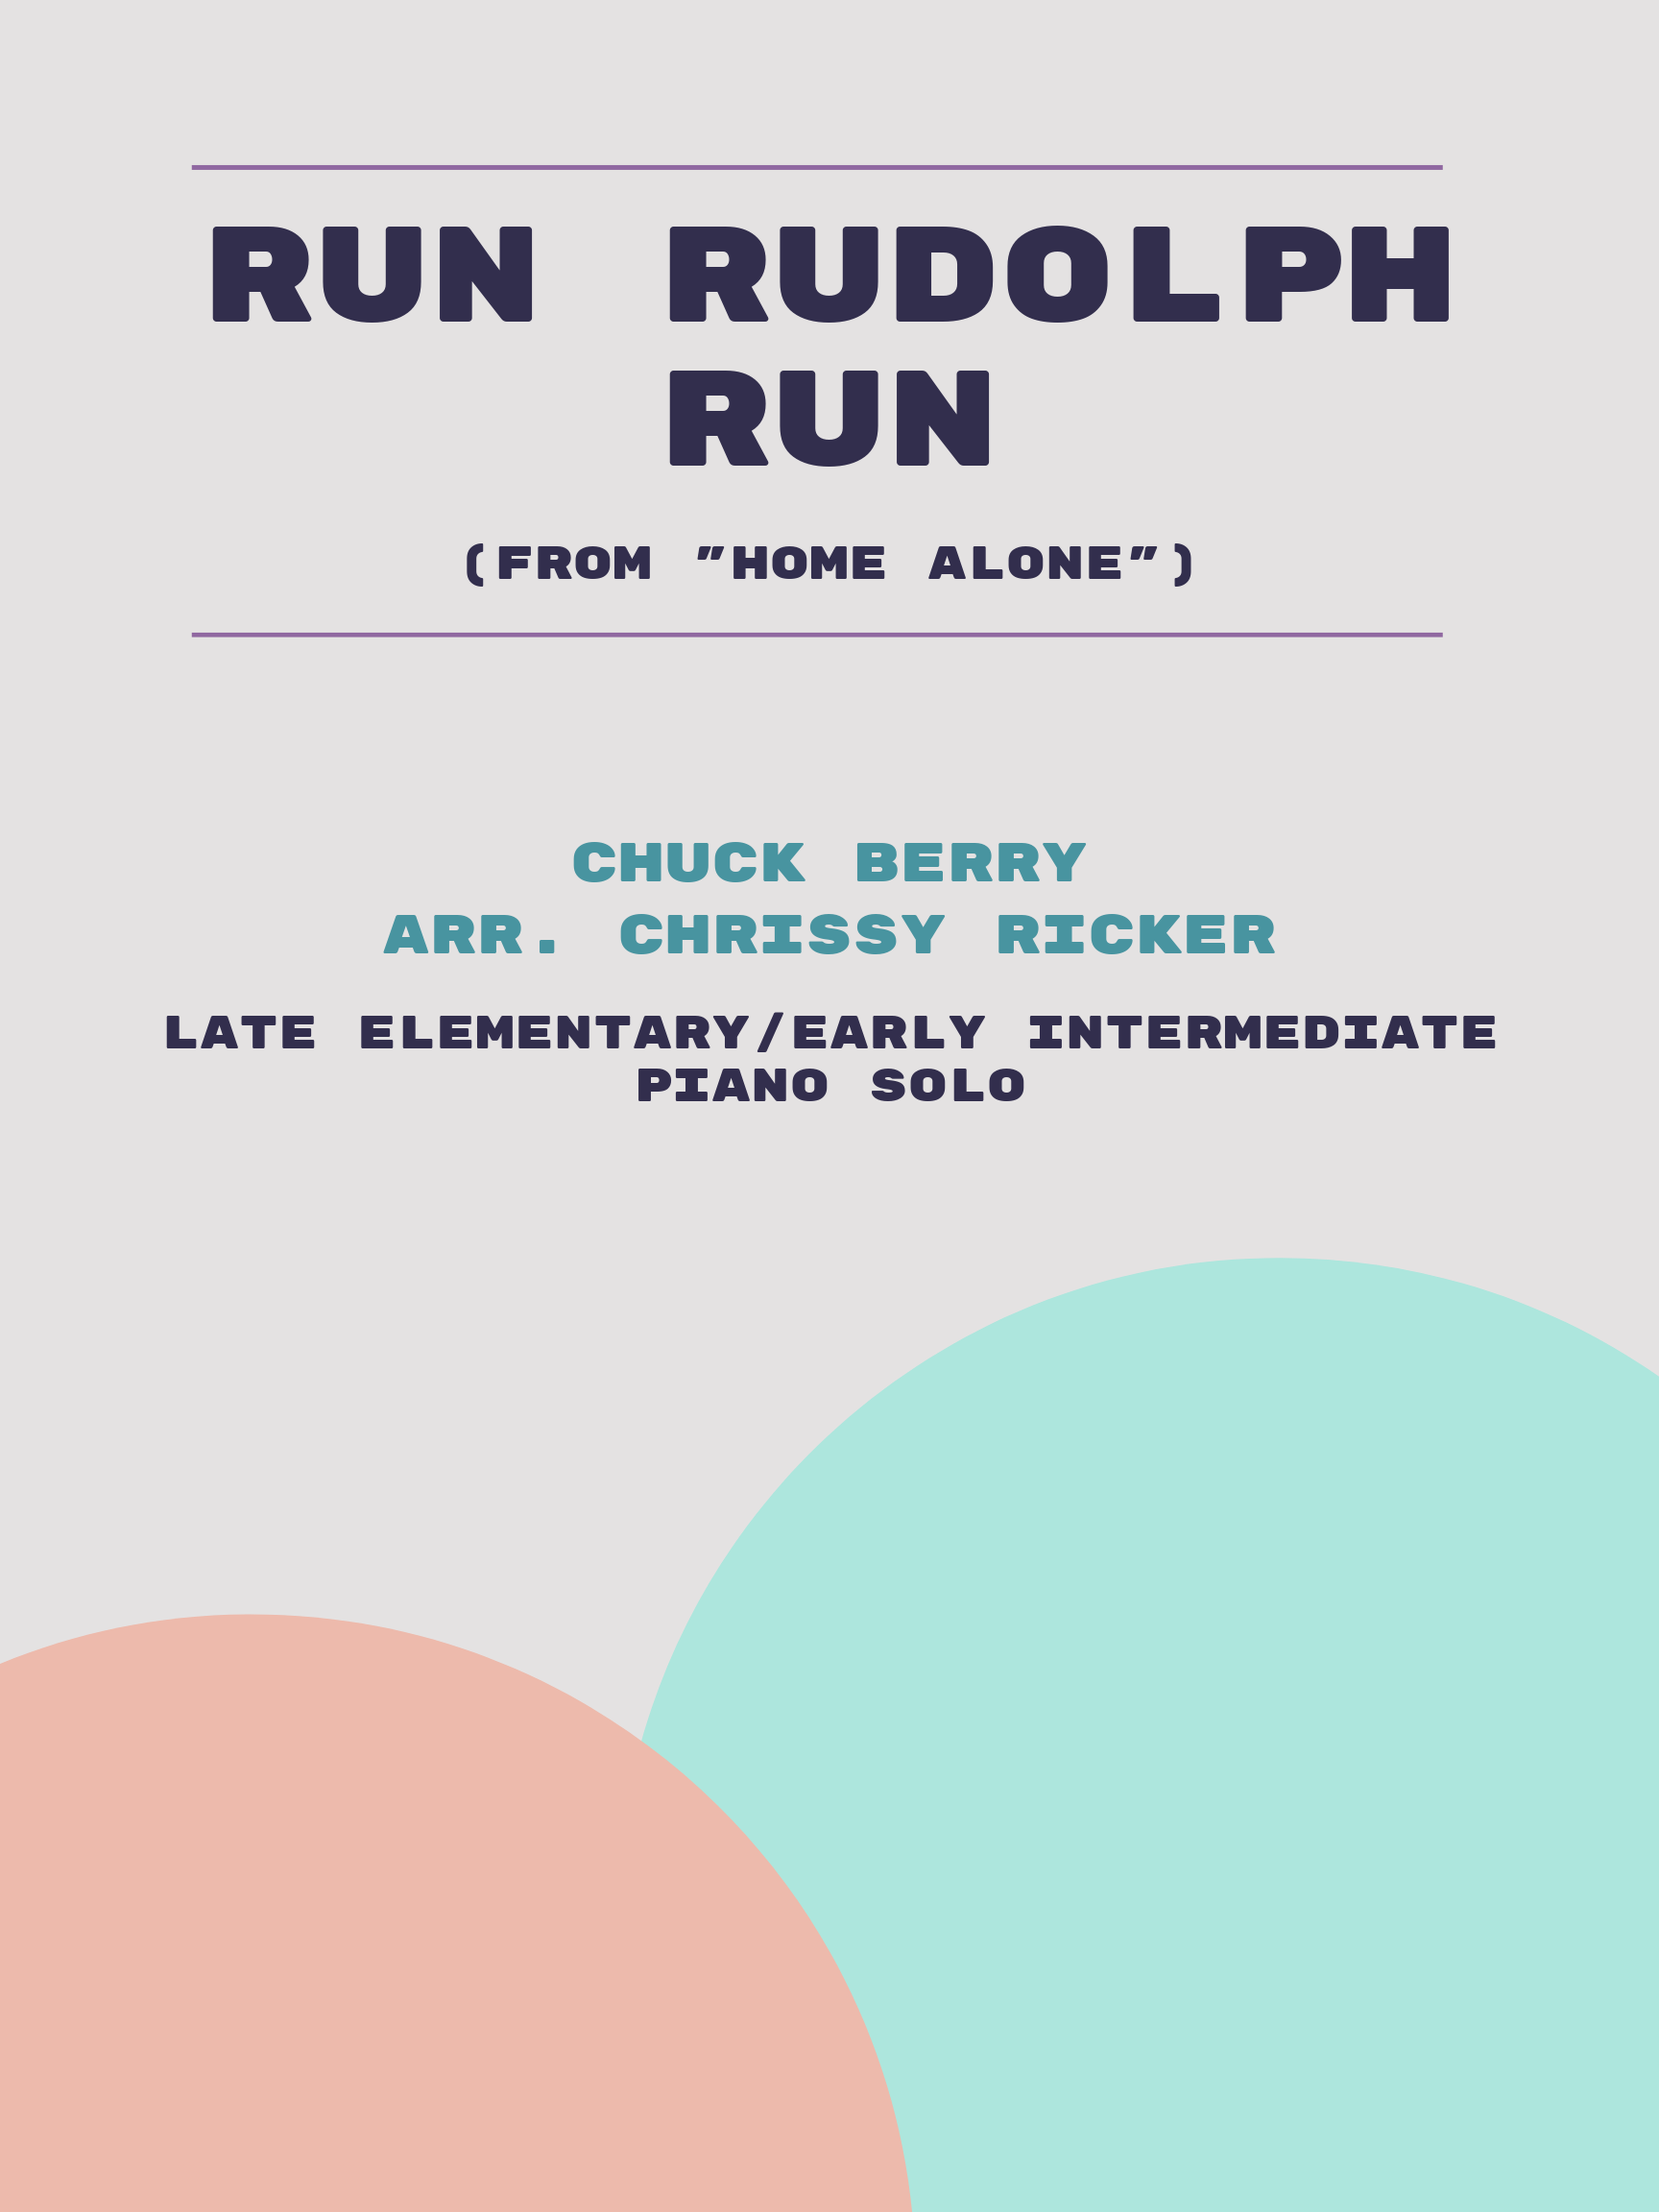 Run Rudolph Run by Chuck Berry